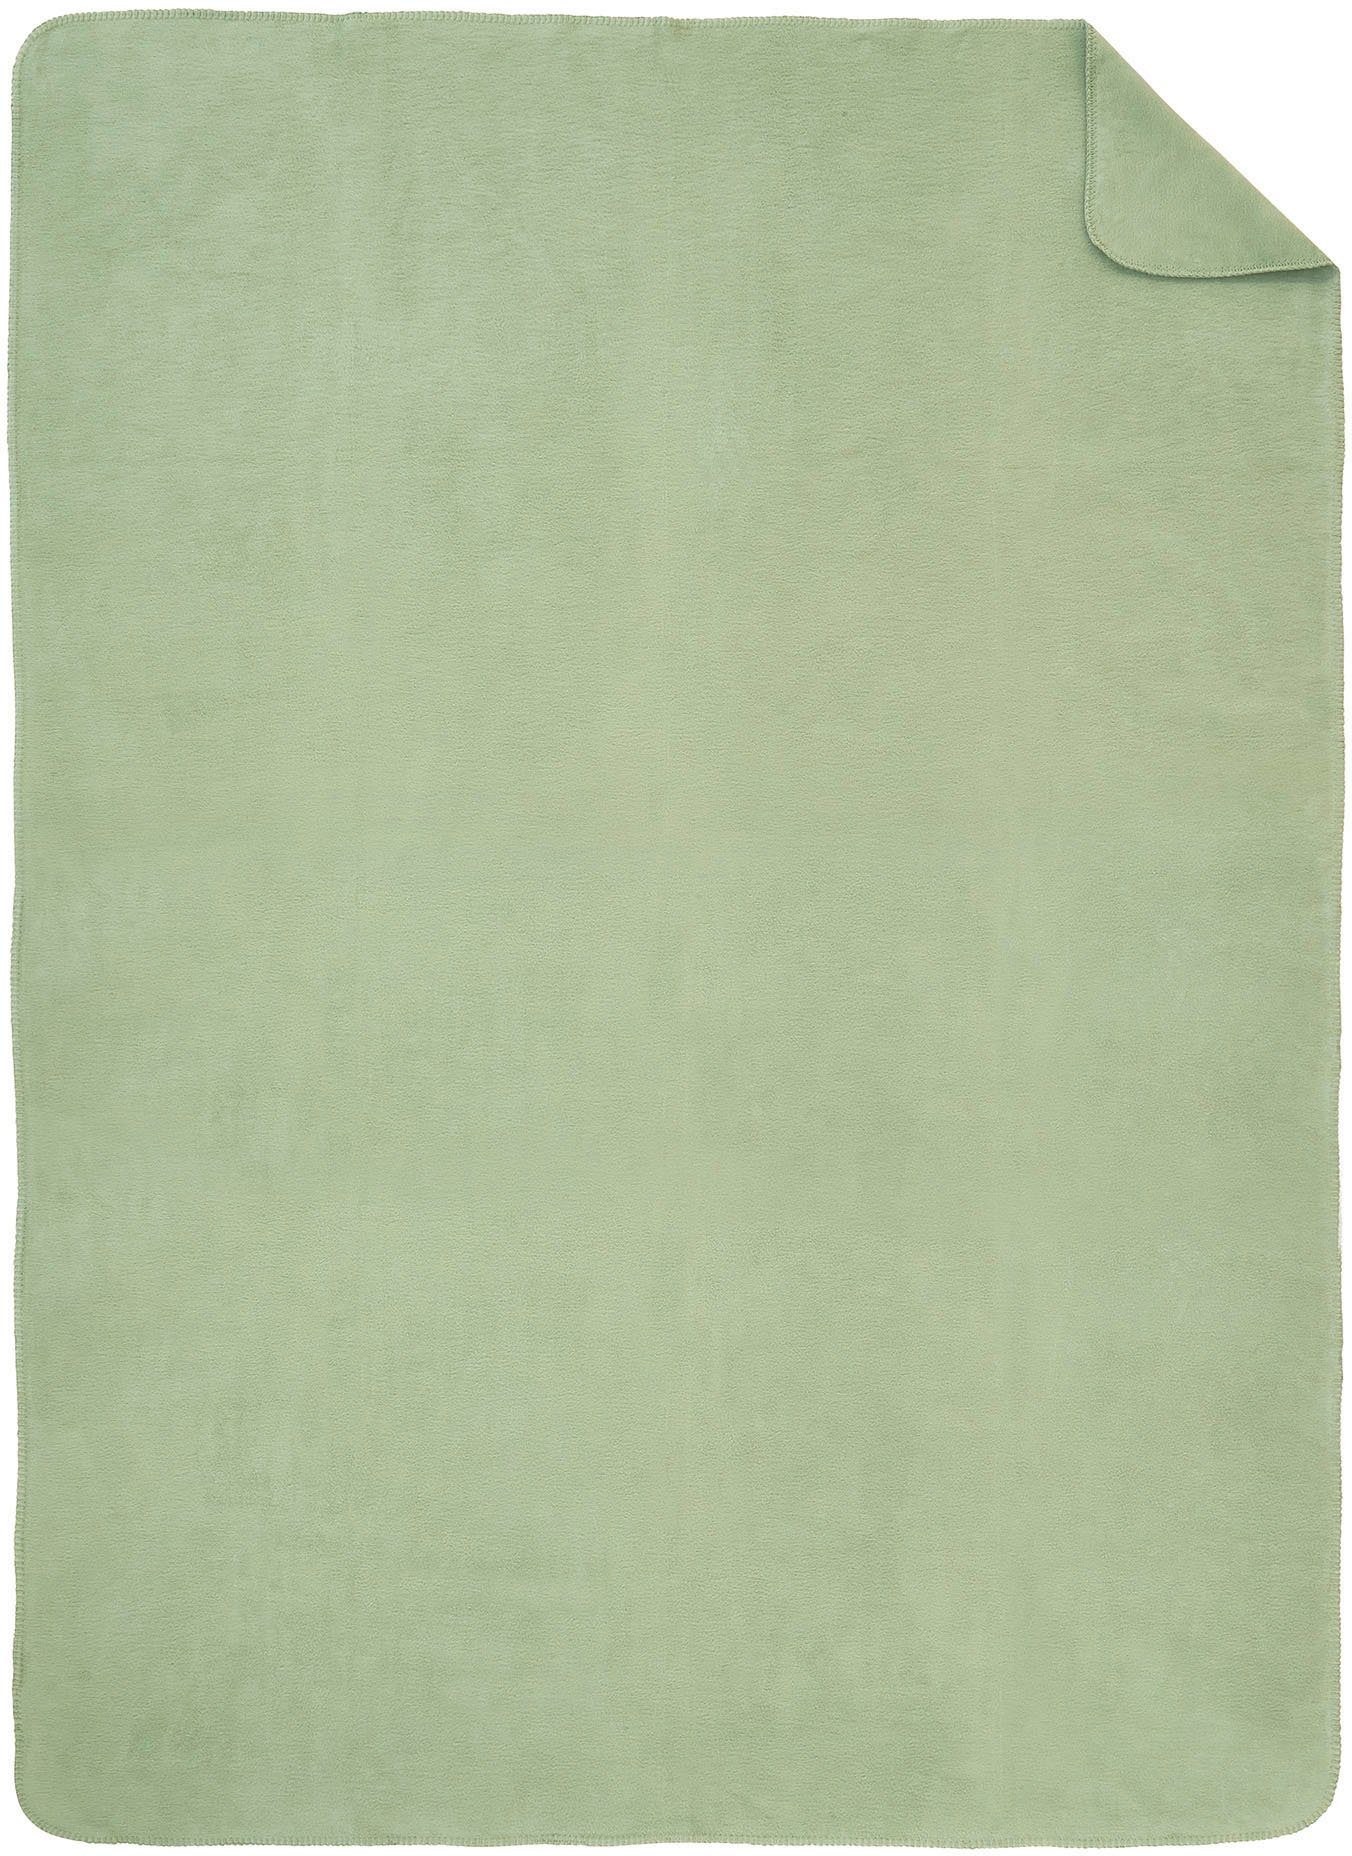 Wohndecke Uni Decke Malaga, IBENA, grün unifarben